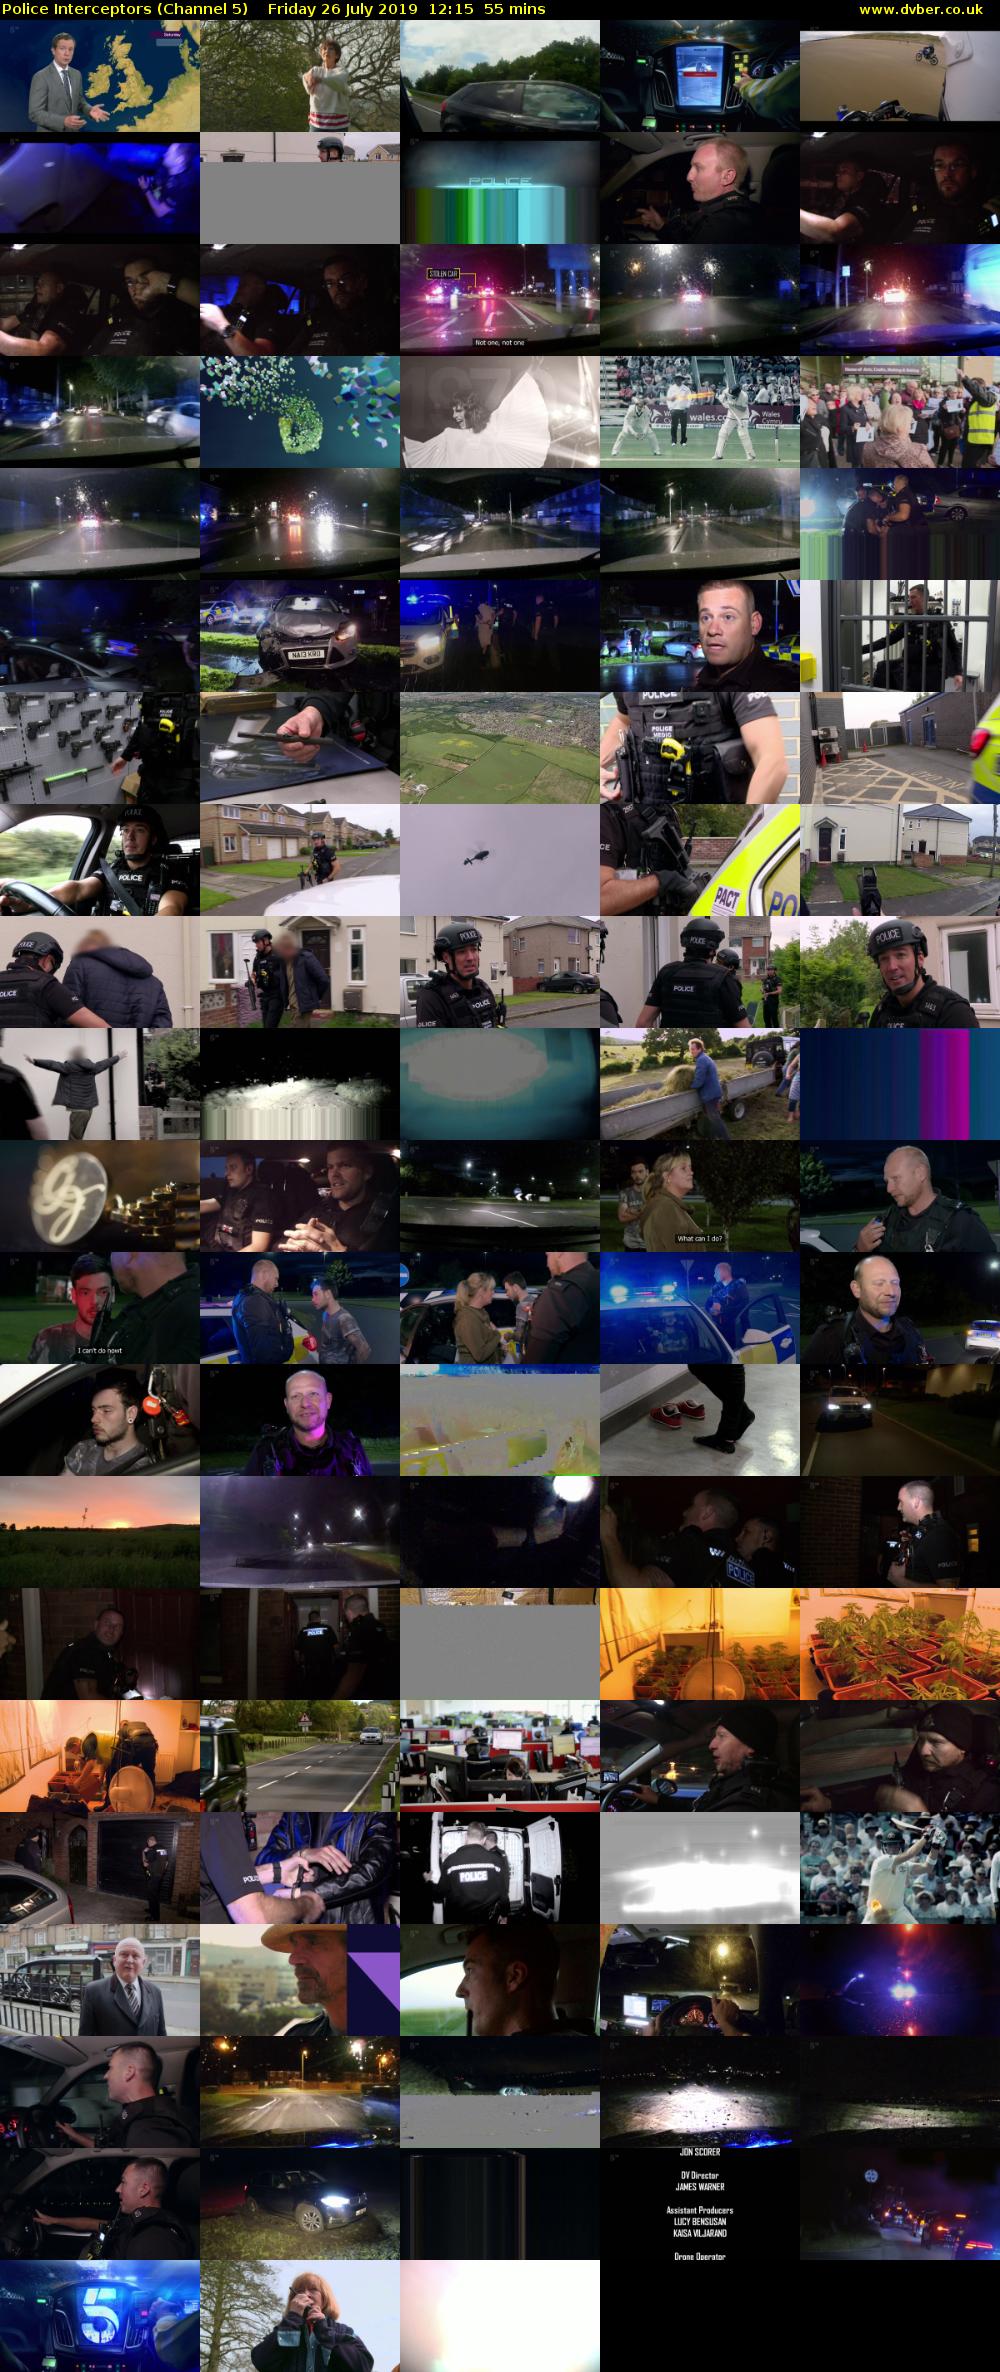 Police Interceptors (Channel 5) Friday 26 July 2019 12:15 - 13:10